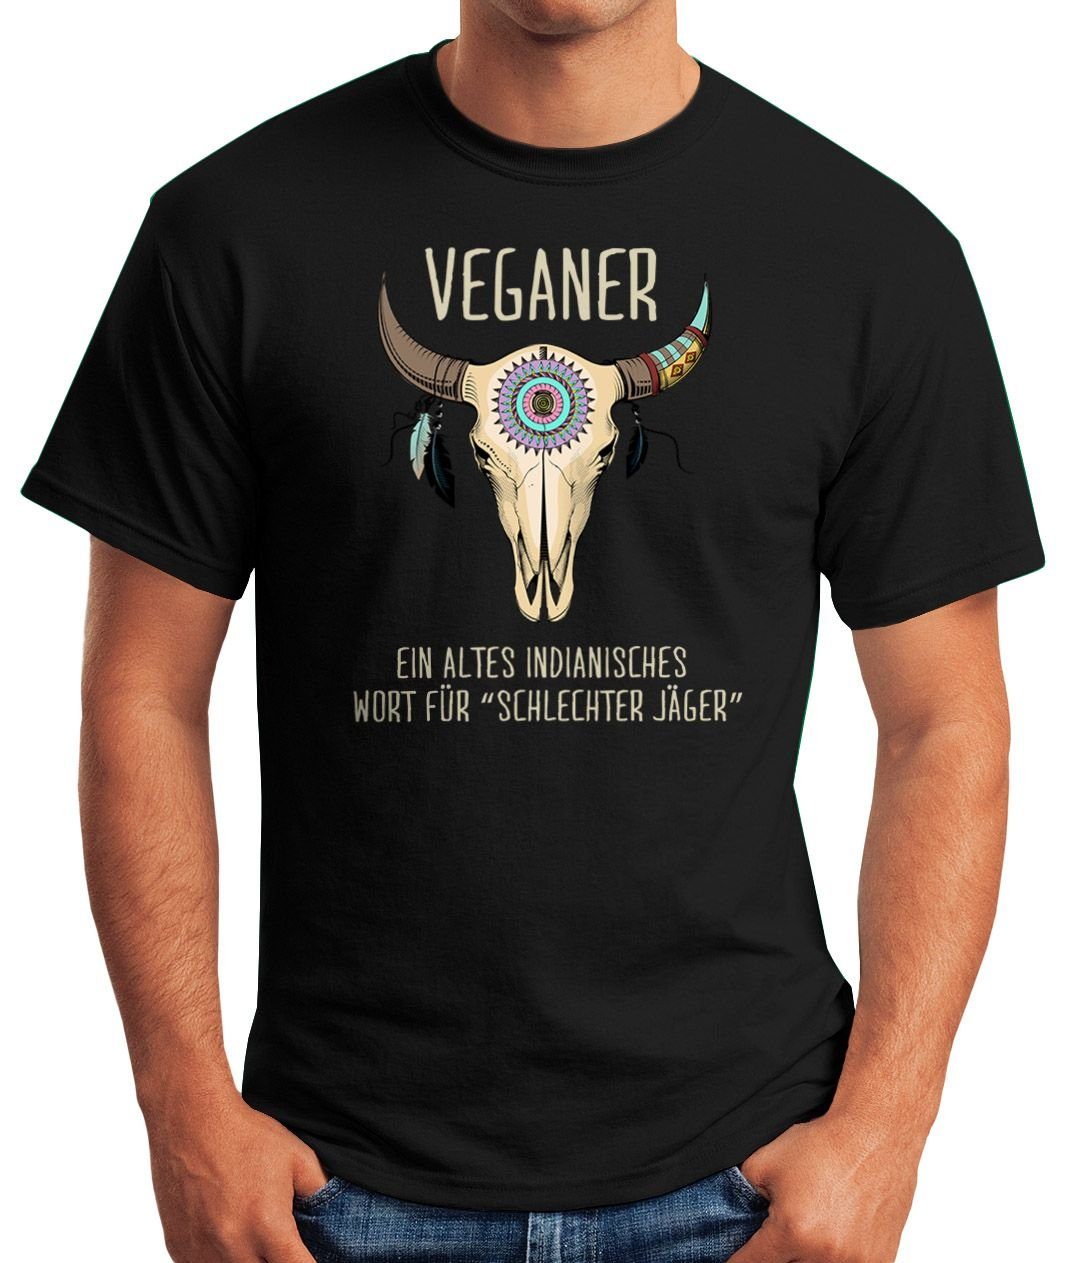 Moonworks® Herren Vegetarier Veganer lustig mit / MoonWorks Veganer Schlechter T-Shirt Jäger Print Skull Print-Shirt Fun-Shirt Spruch schwarz